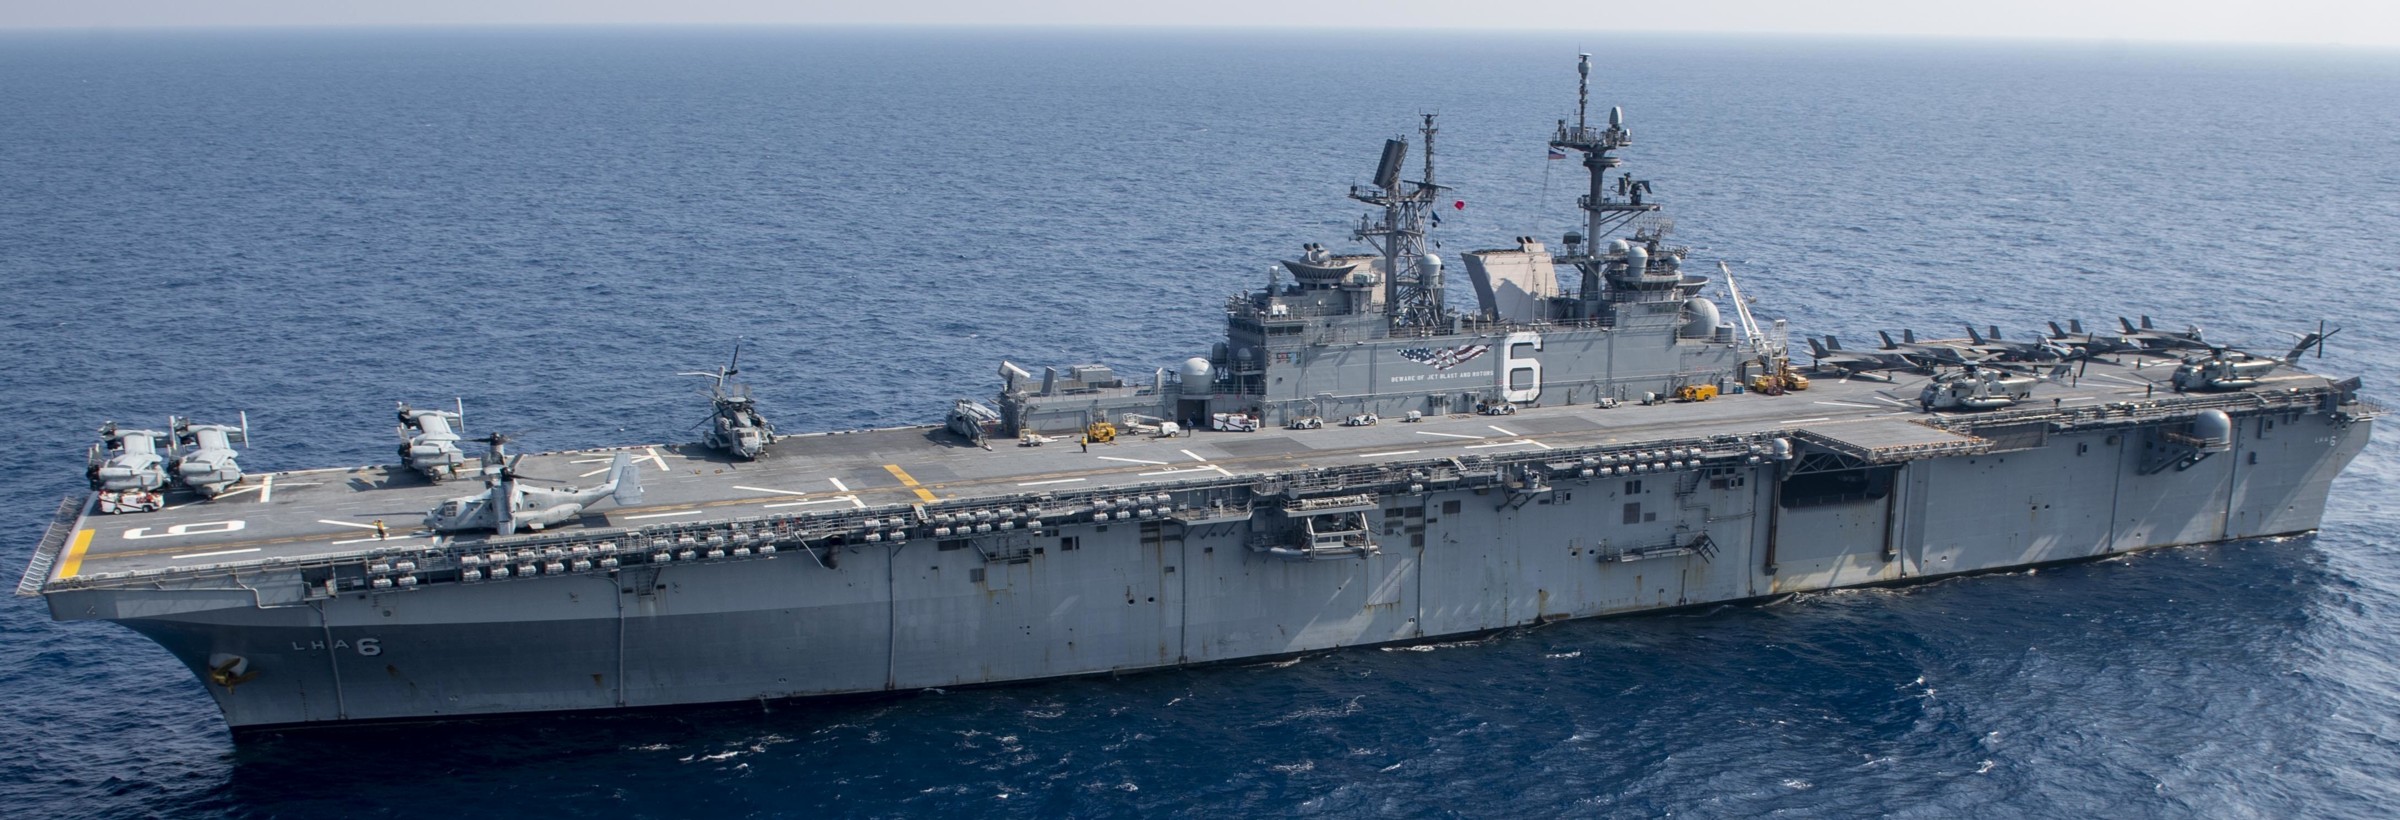 lha-6 uss america amphibious assault ship landing us navy marines vmm-265 east china sea 171